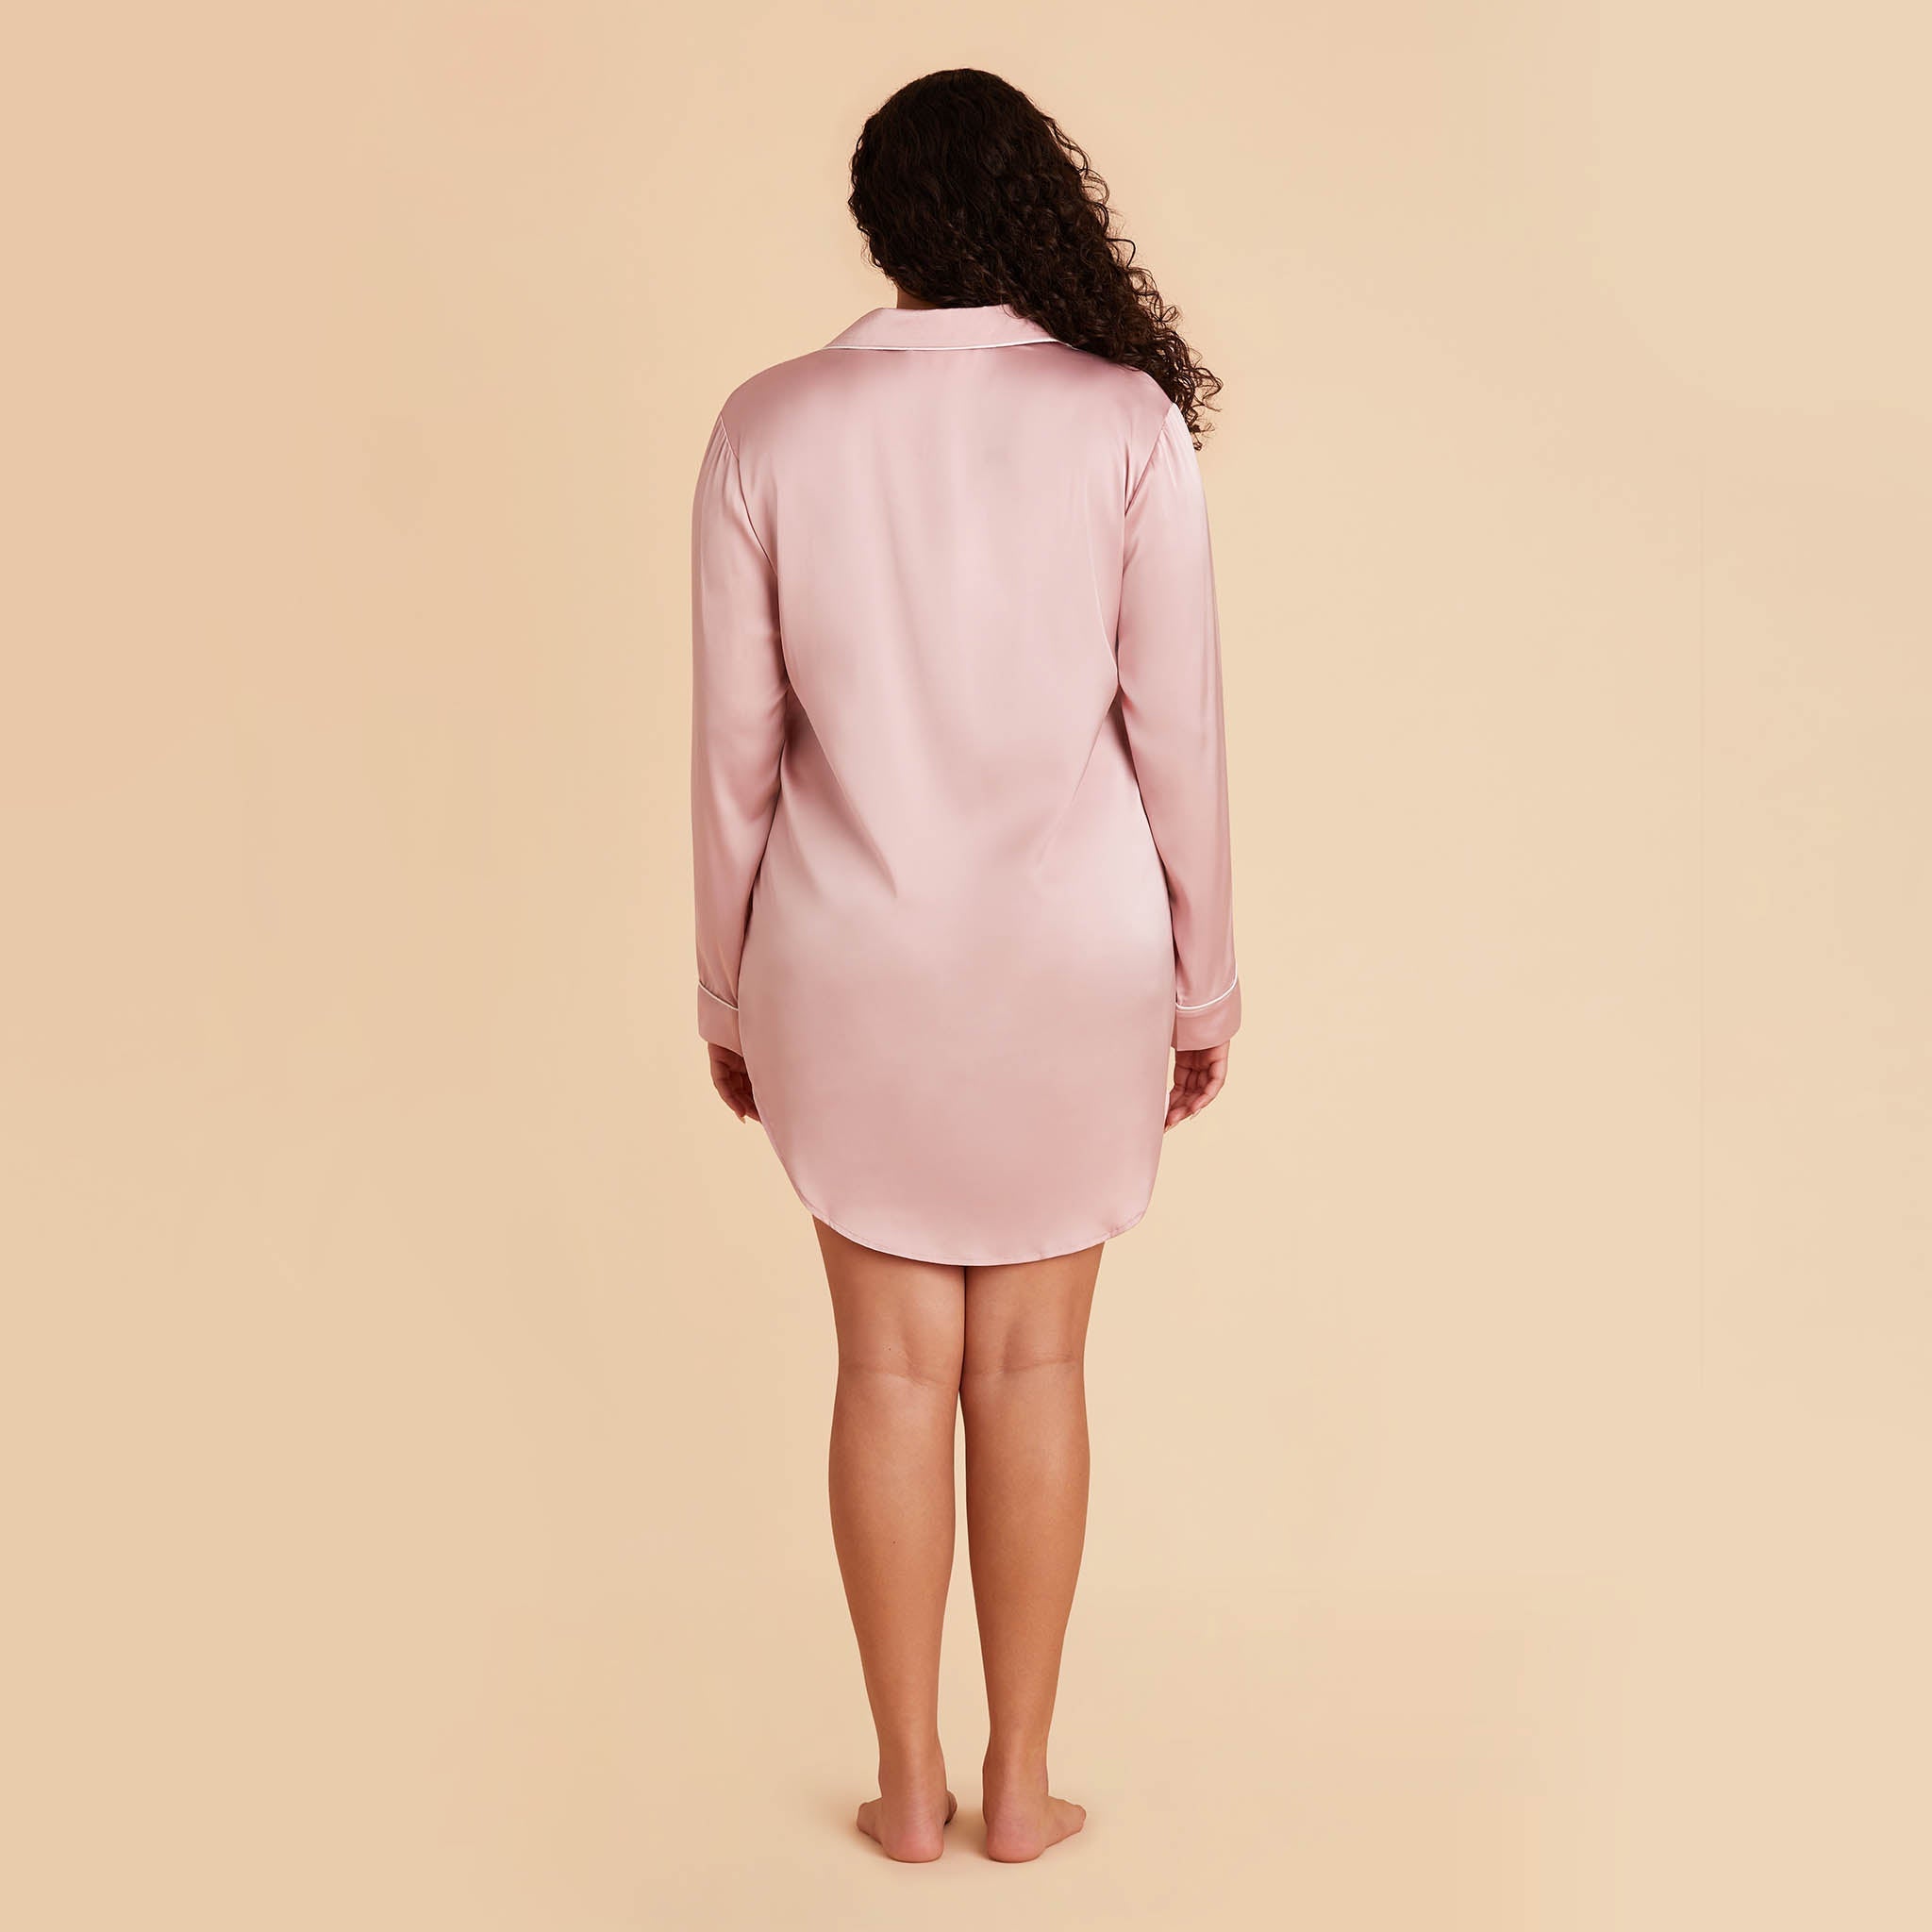 Plus Size Satin Sleepshirt in dusty pink by Birdy Grey, back view